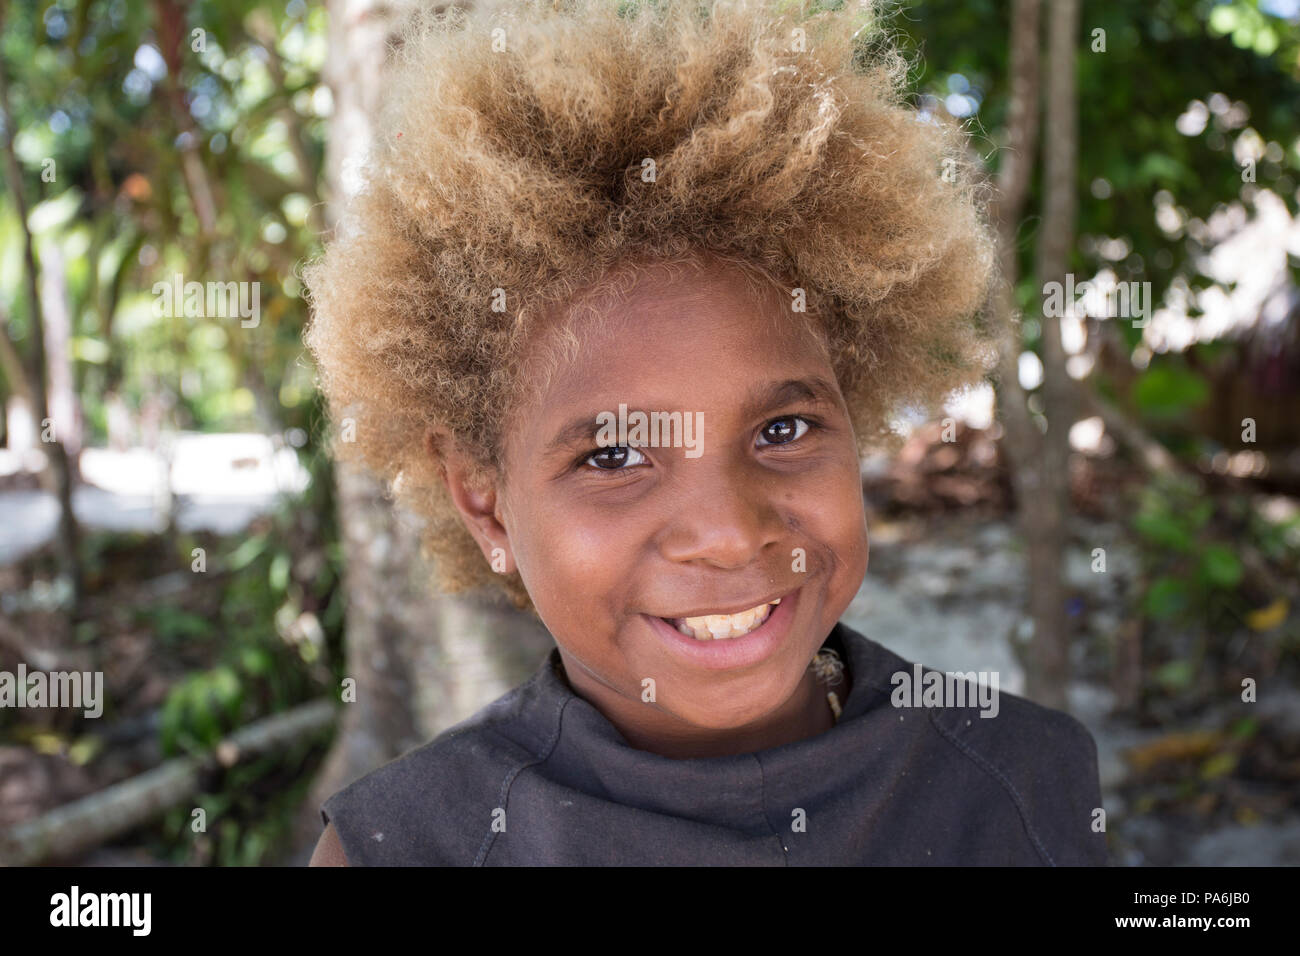 Blonde Haired Solomon Island Boy Stock Photo 212817108 Alamy